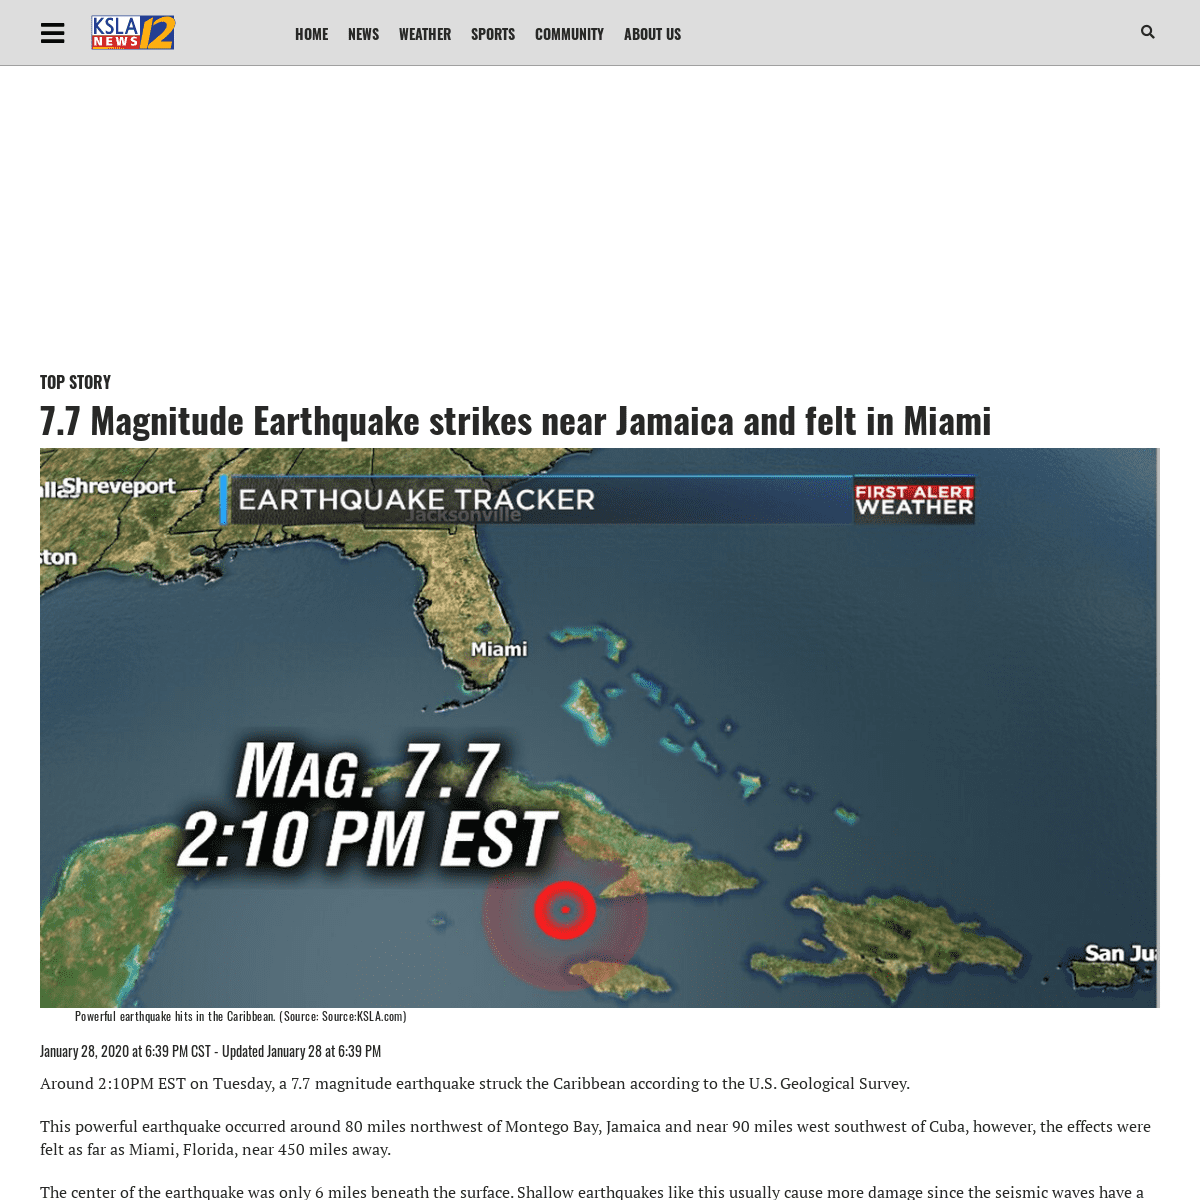 A complete backup of www.ksla.com/2020/01/29/magnitude-earthquake-strikes-near-jamaica-felt-miami/